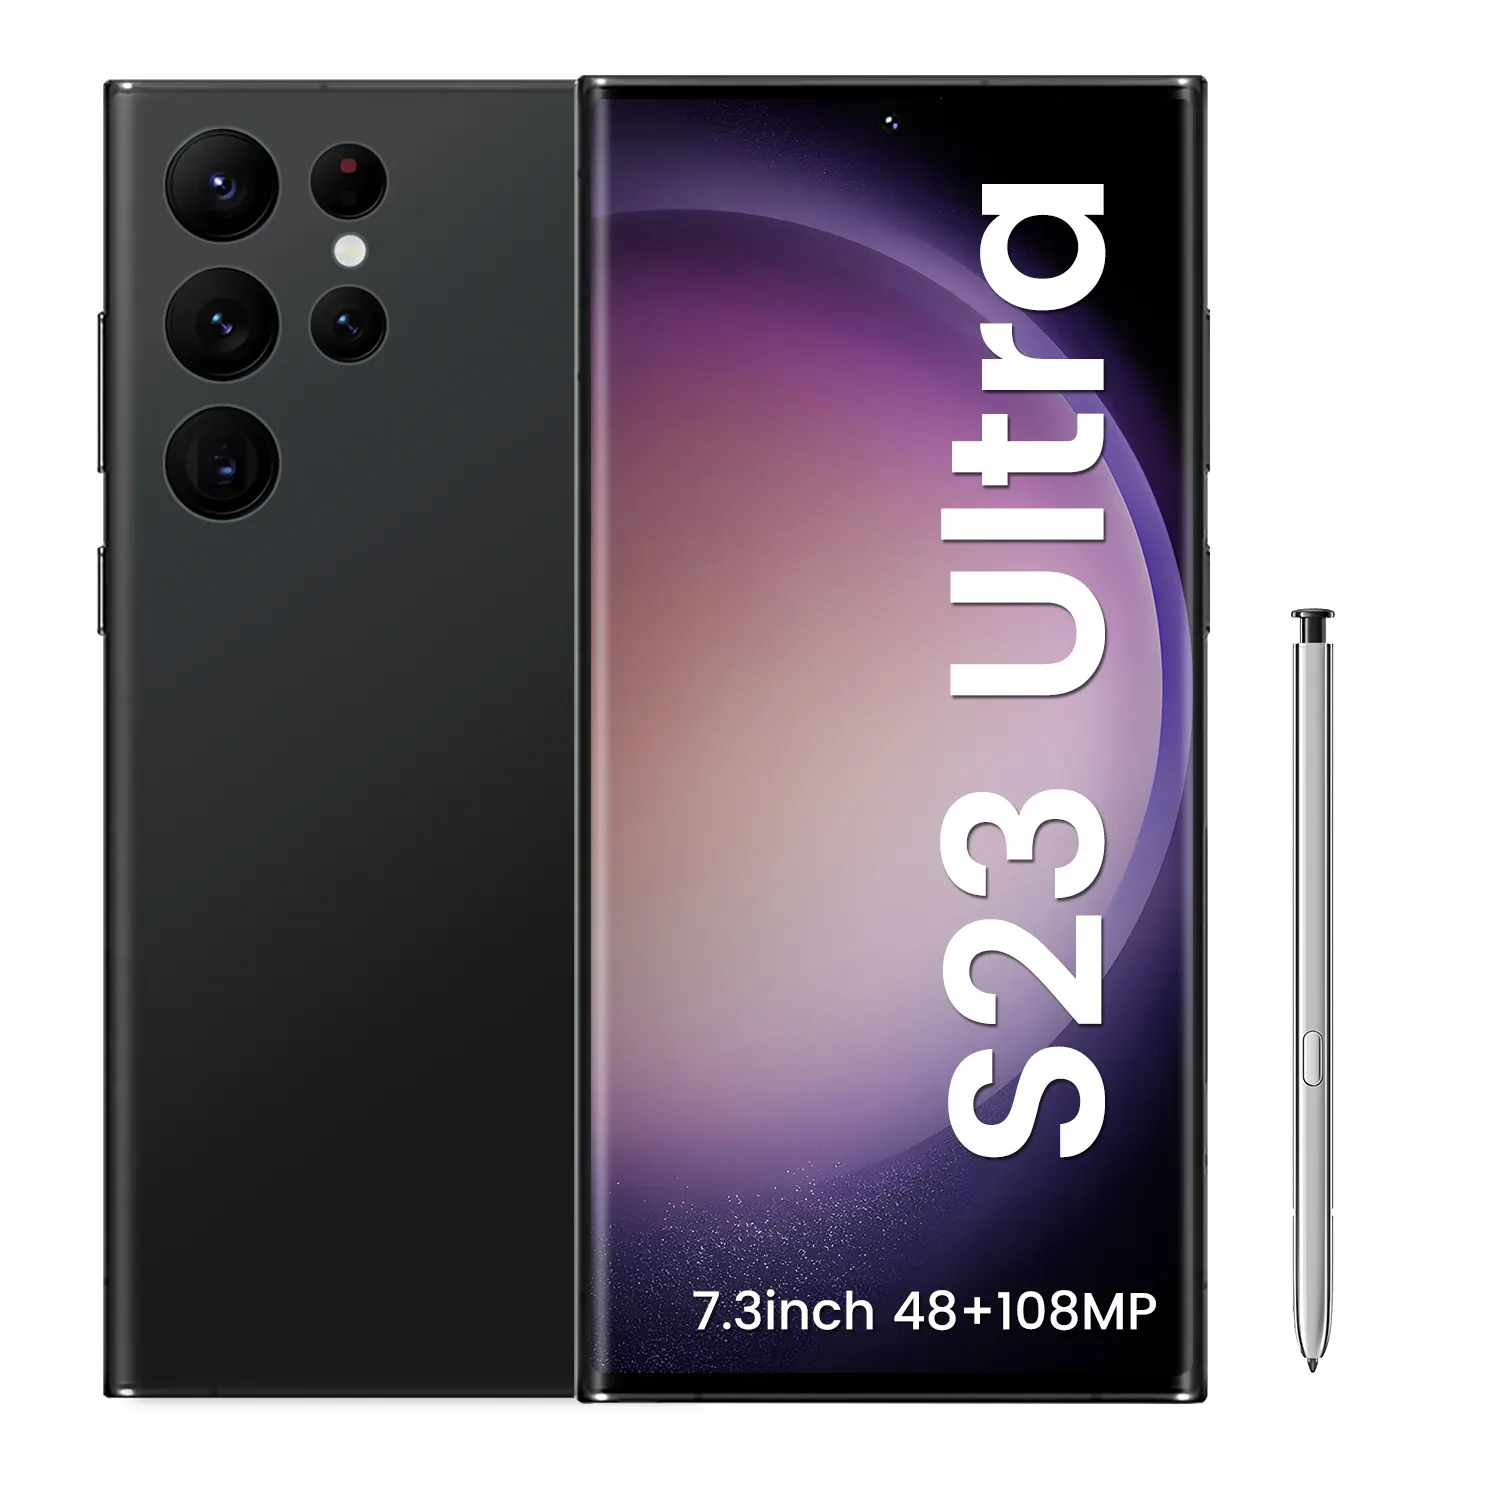 Sıcak satış telefon S23 Ultra orijinal 3GB + 32GB 6.67 inç telefon orijinal tam ekran Android 6 cep telefonu akıllı telefon